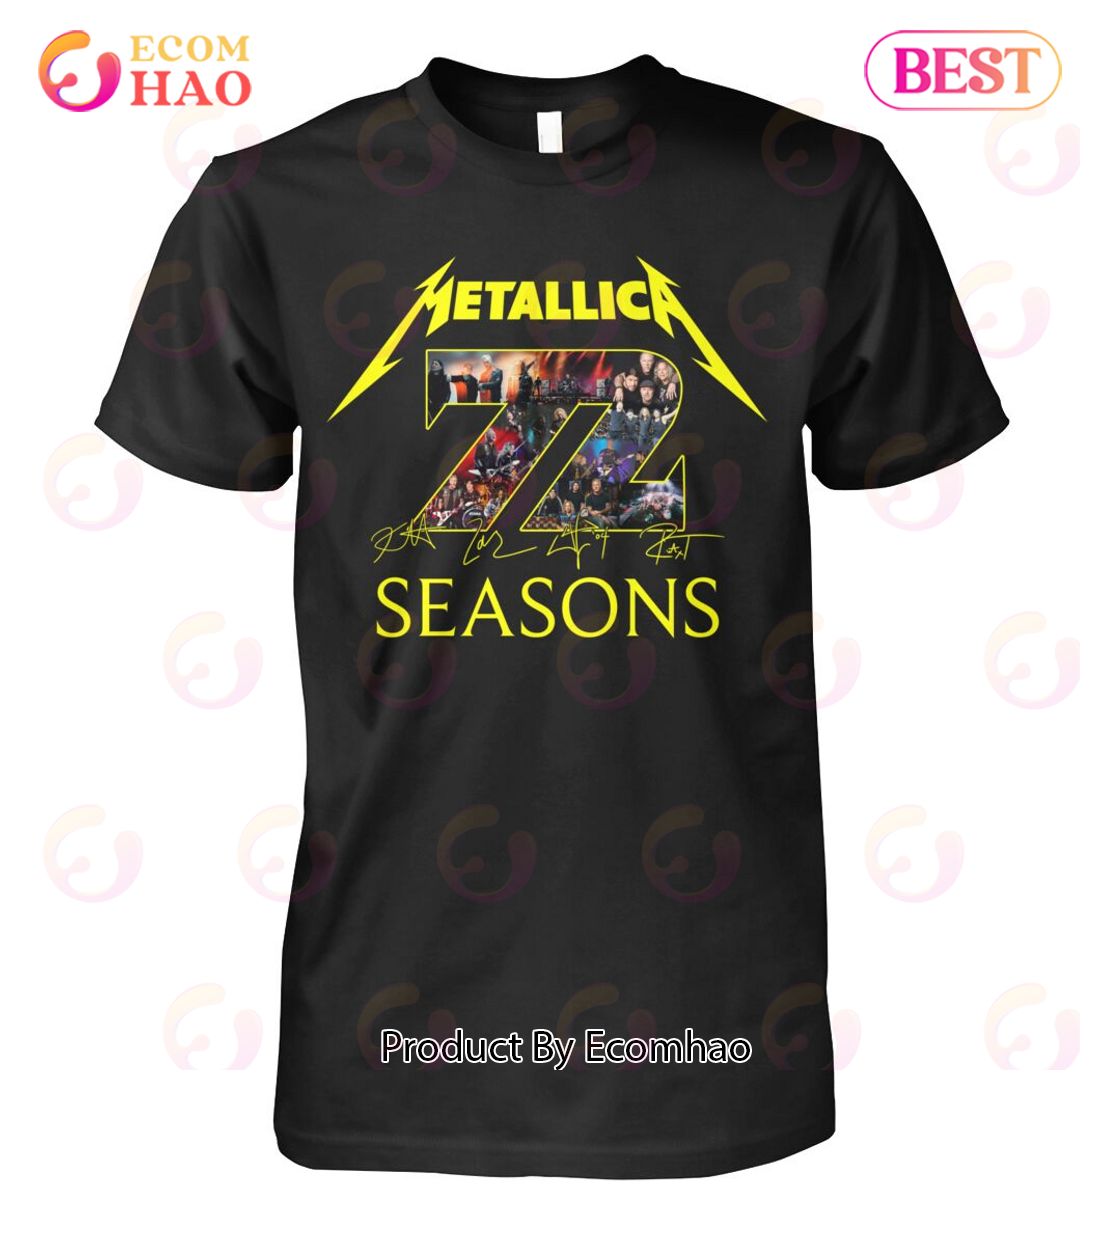 Metallica 72 Seasons Signature T-Shirt - Ecomhao Store